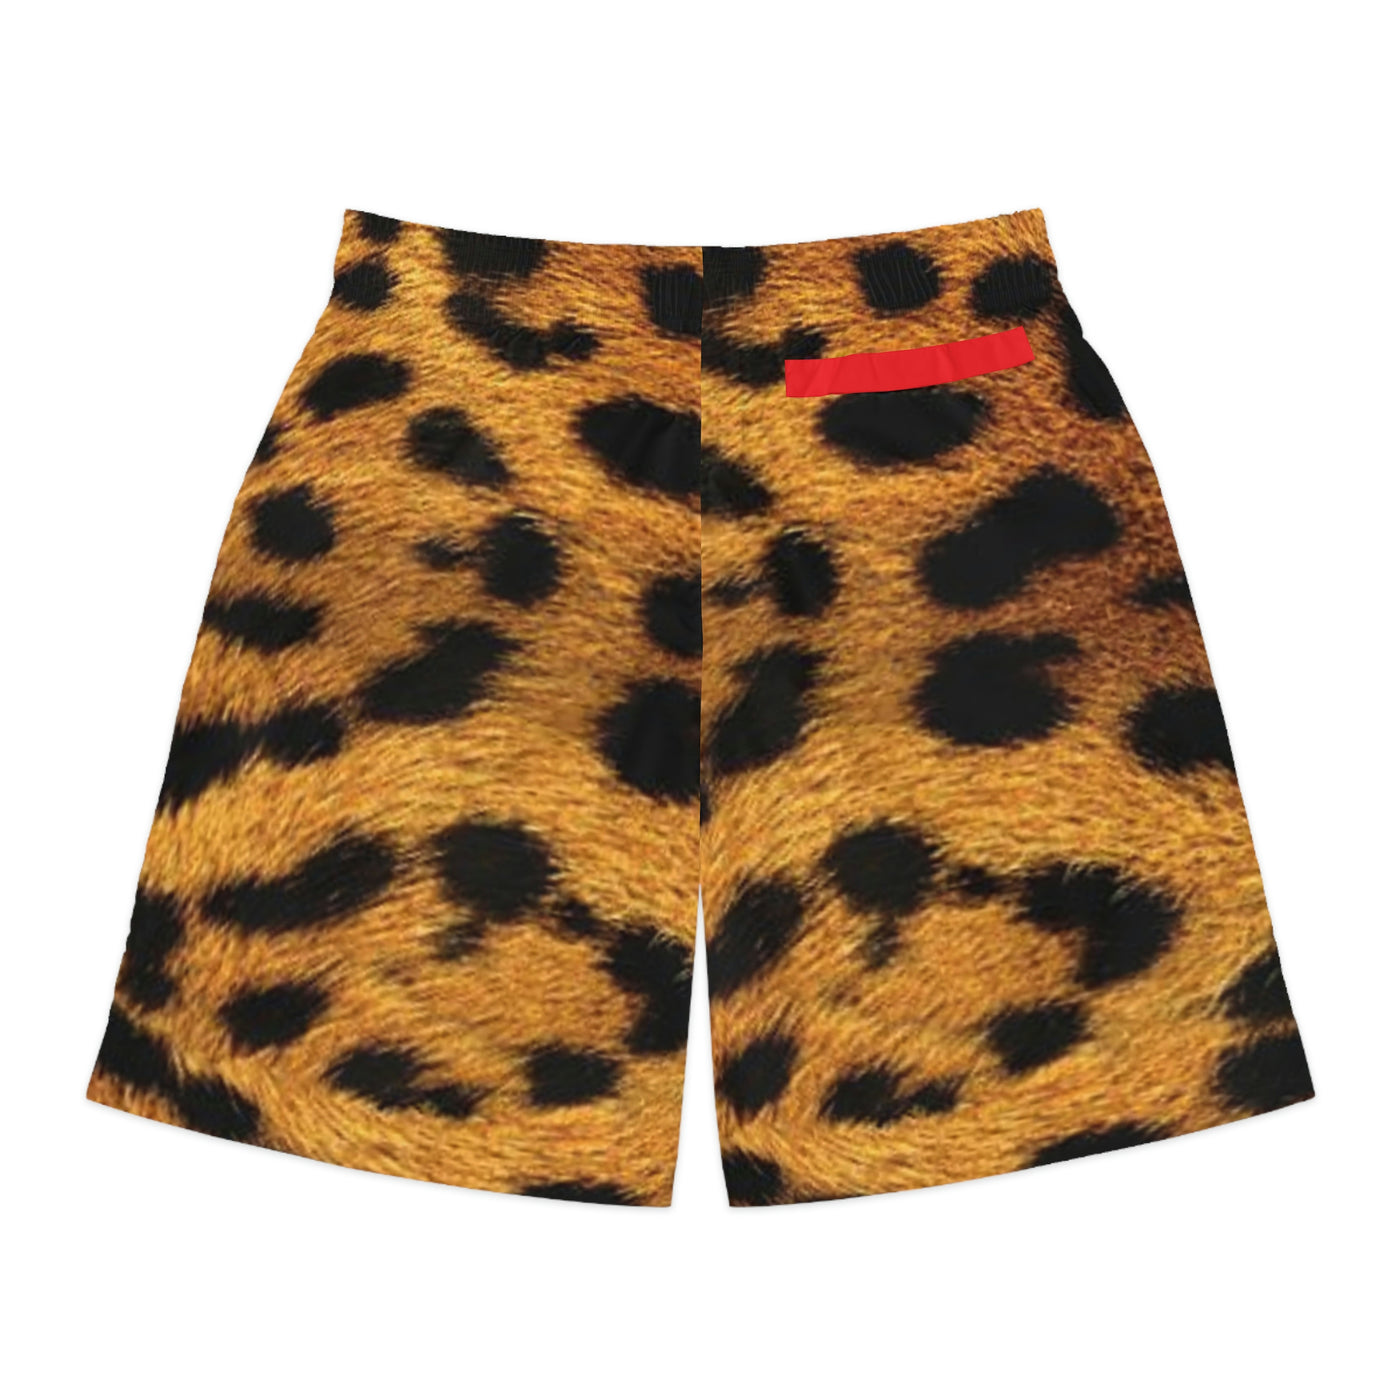 Leopard Men's Jogger Shorts (AOP) - NoCeilingsClothing